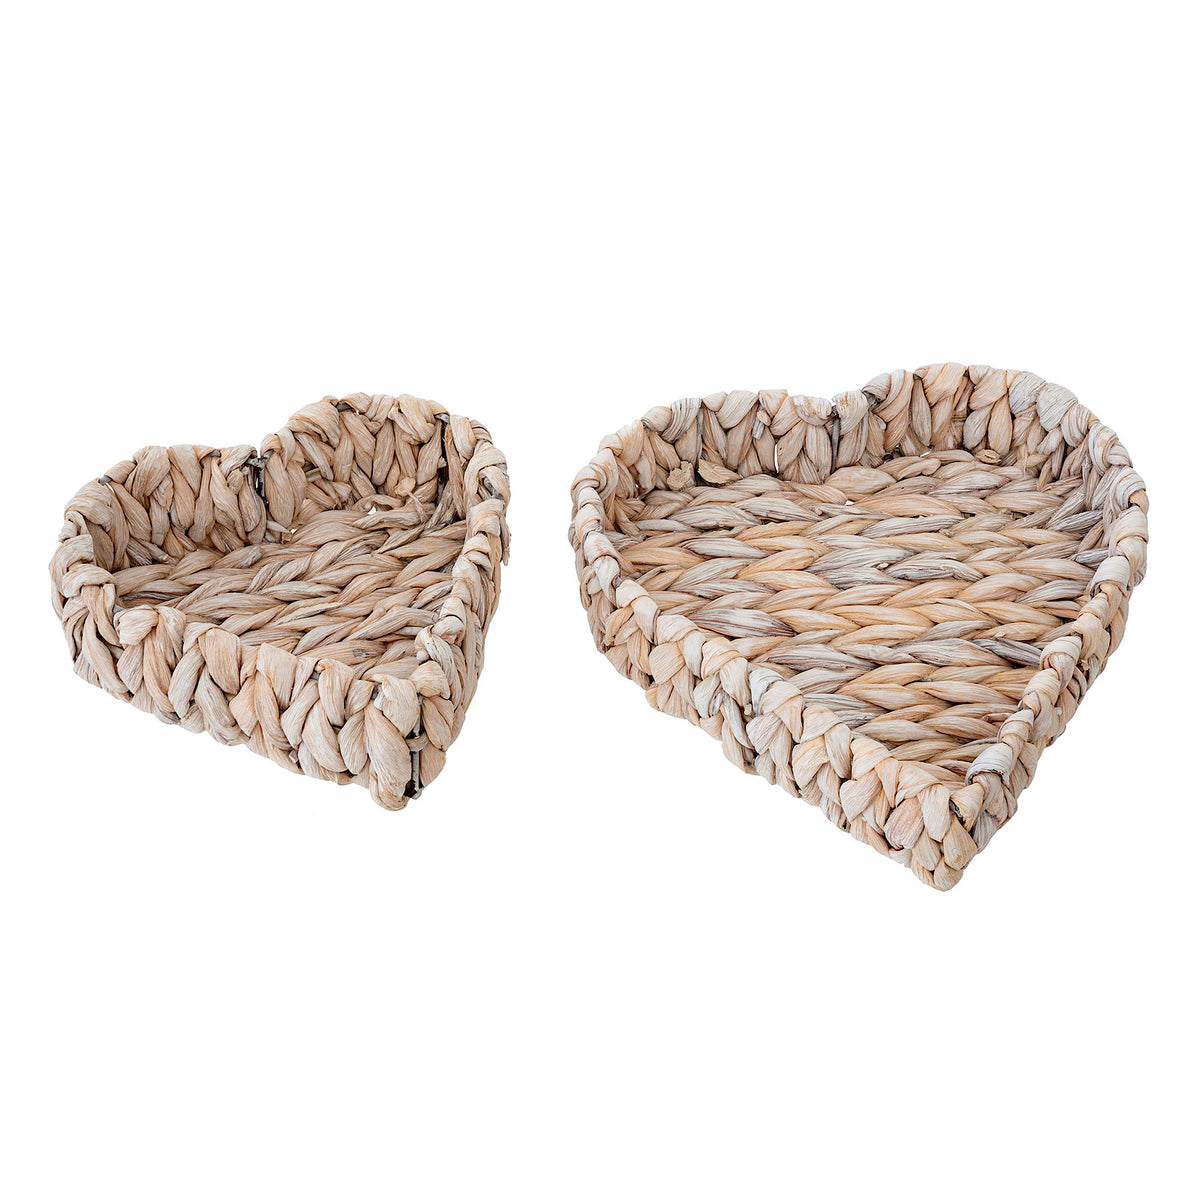 Set of 2 Heart Baskets, White